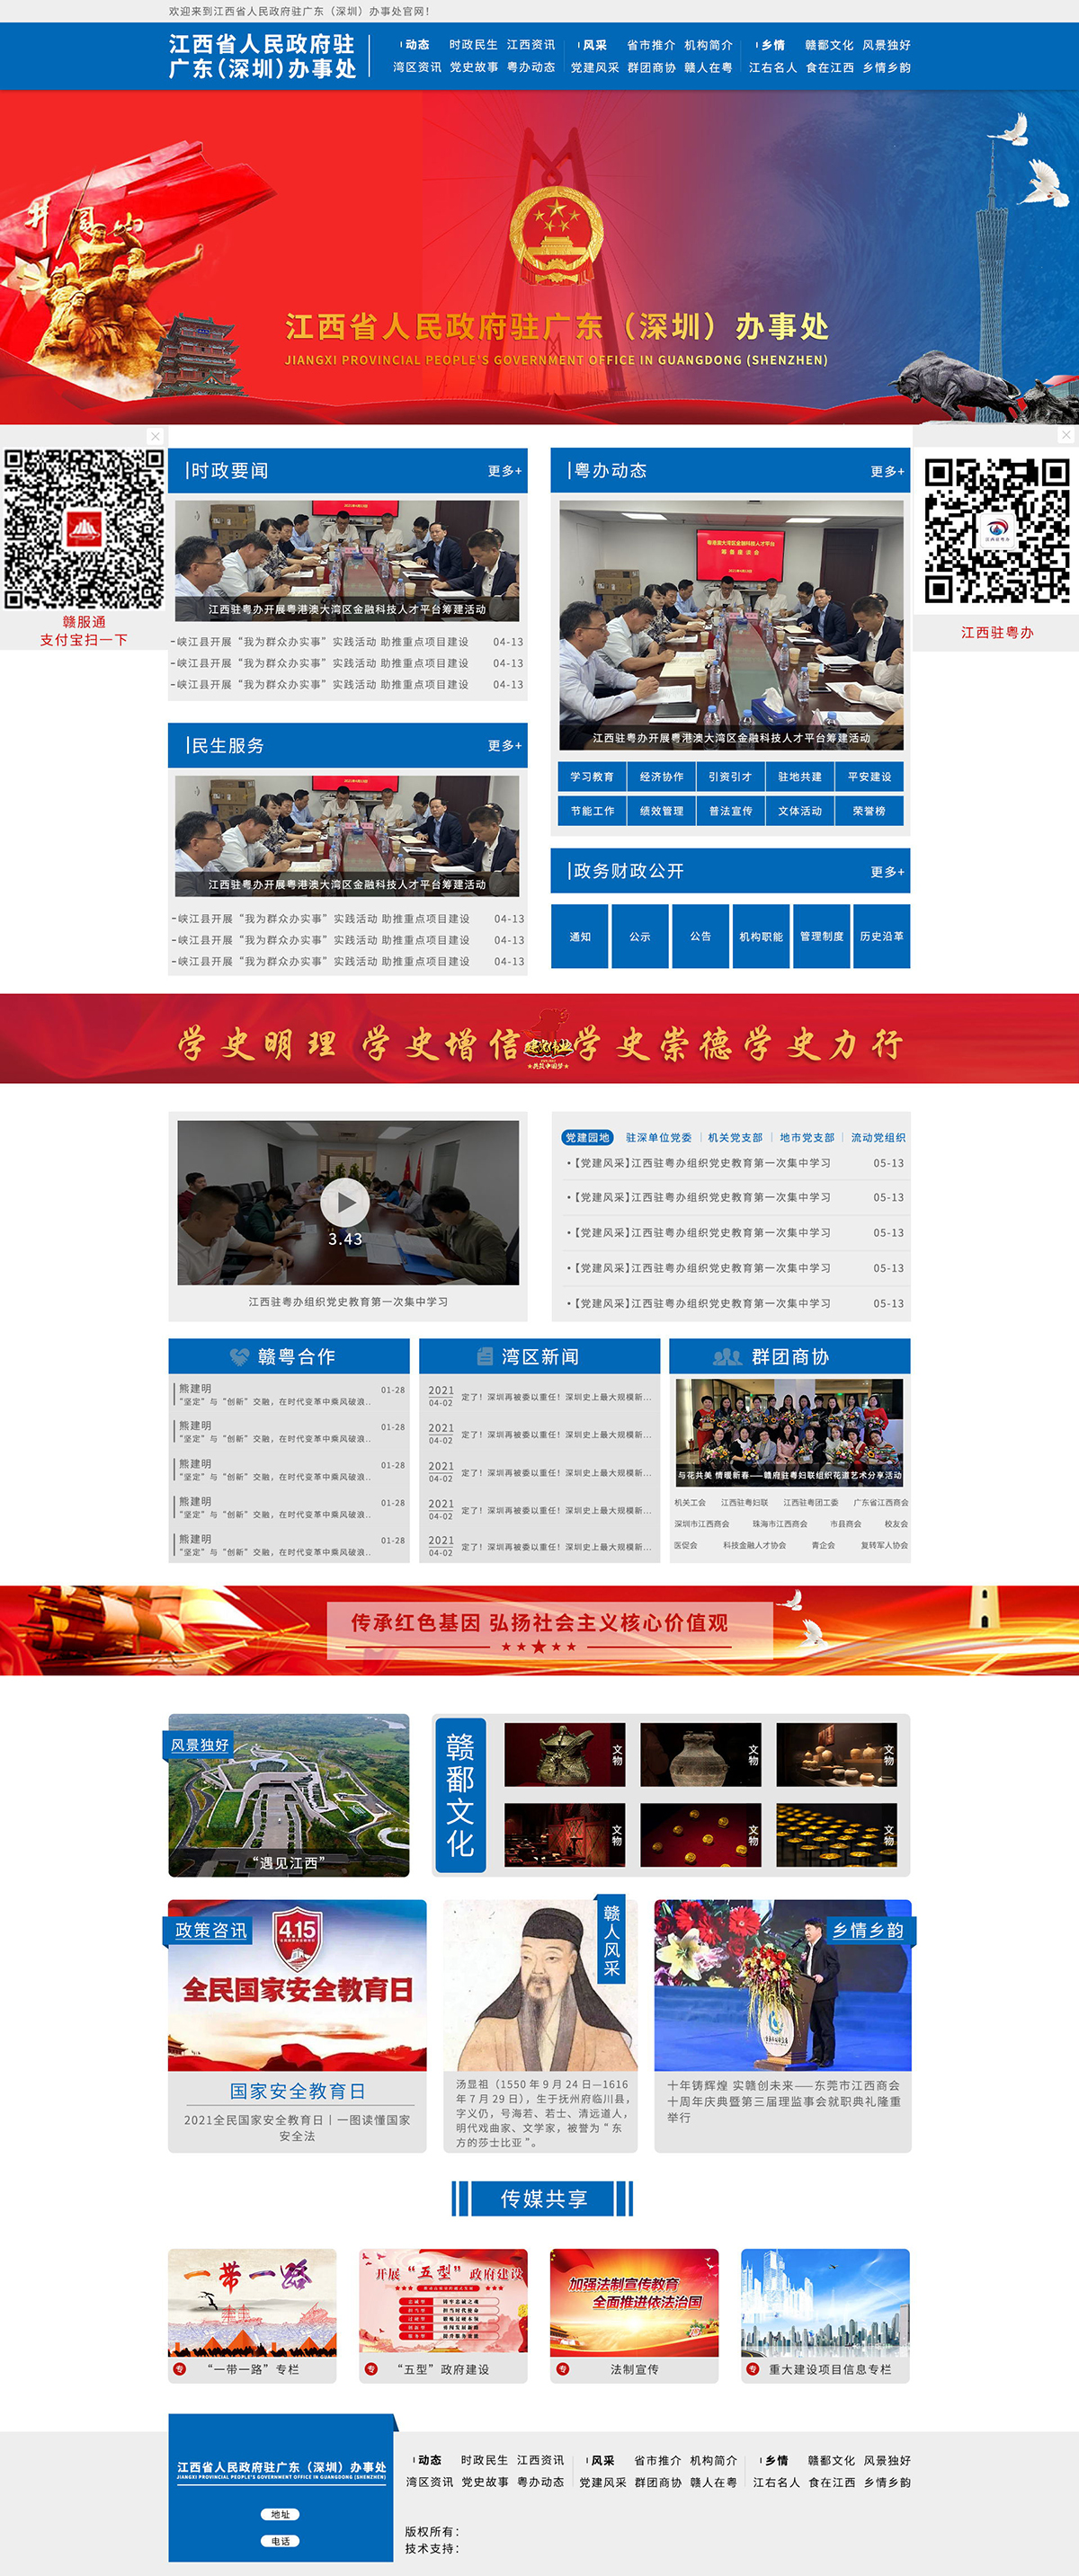 PC政府网站2_看图王_看图王.jpg